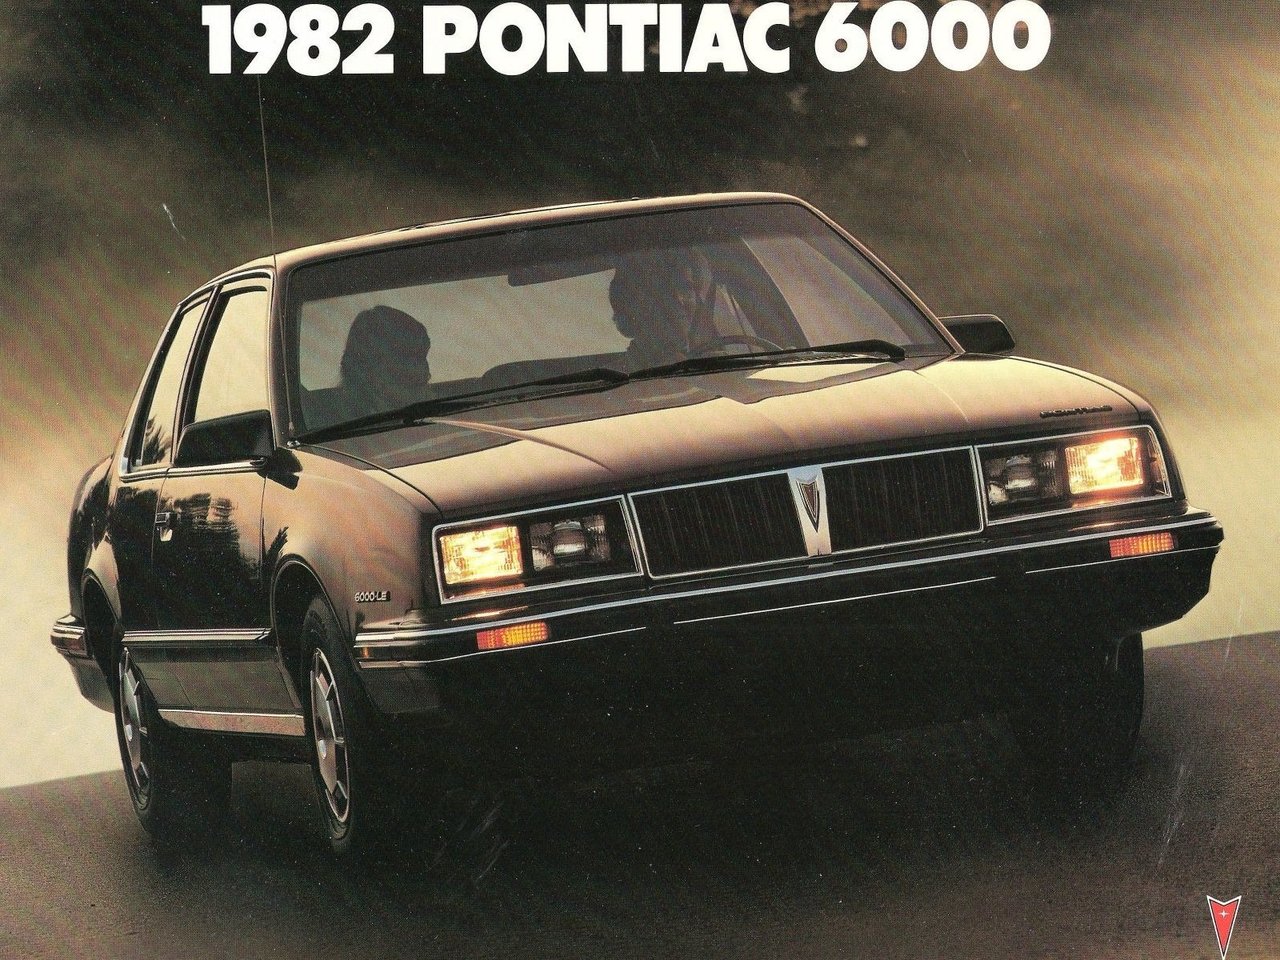 Снижаем расход Pontiac 6000 на топливо, устанавливаем ГБО